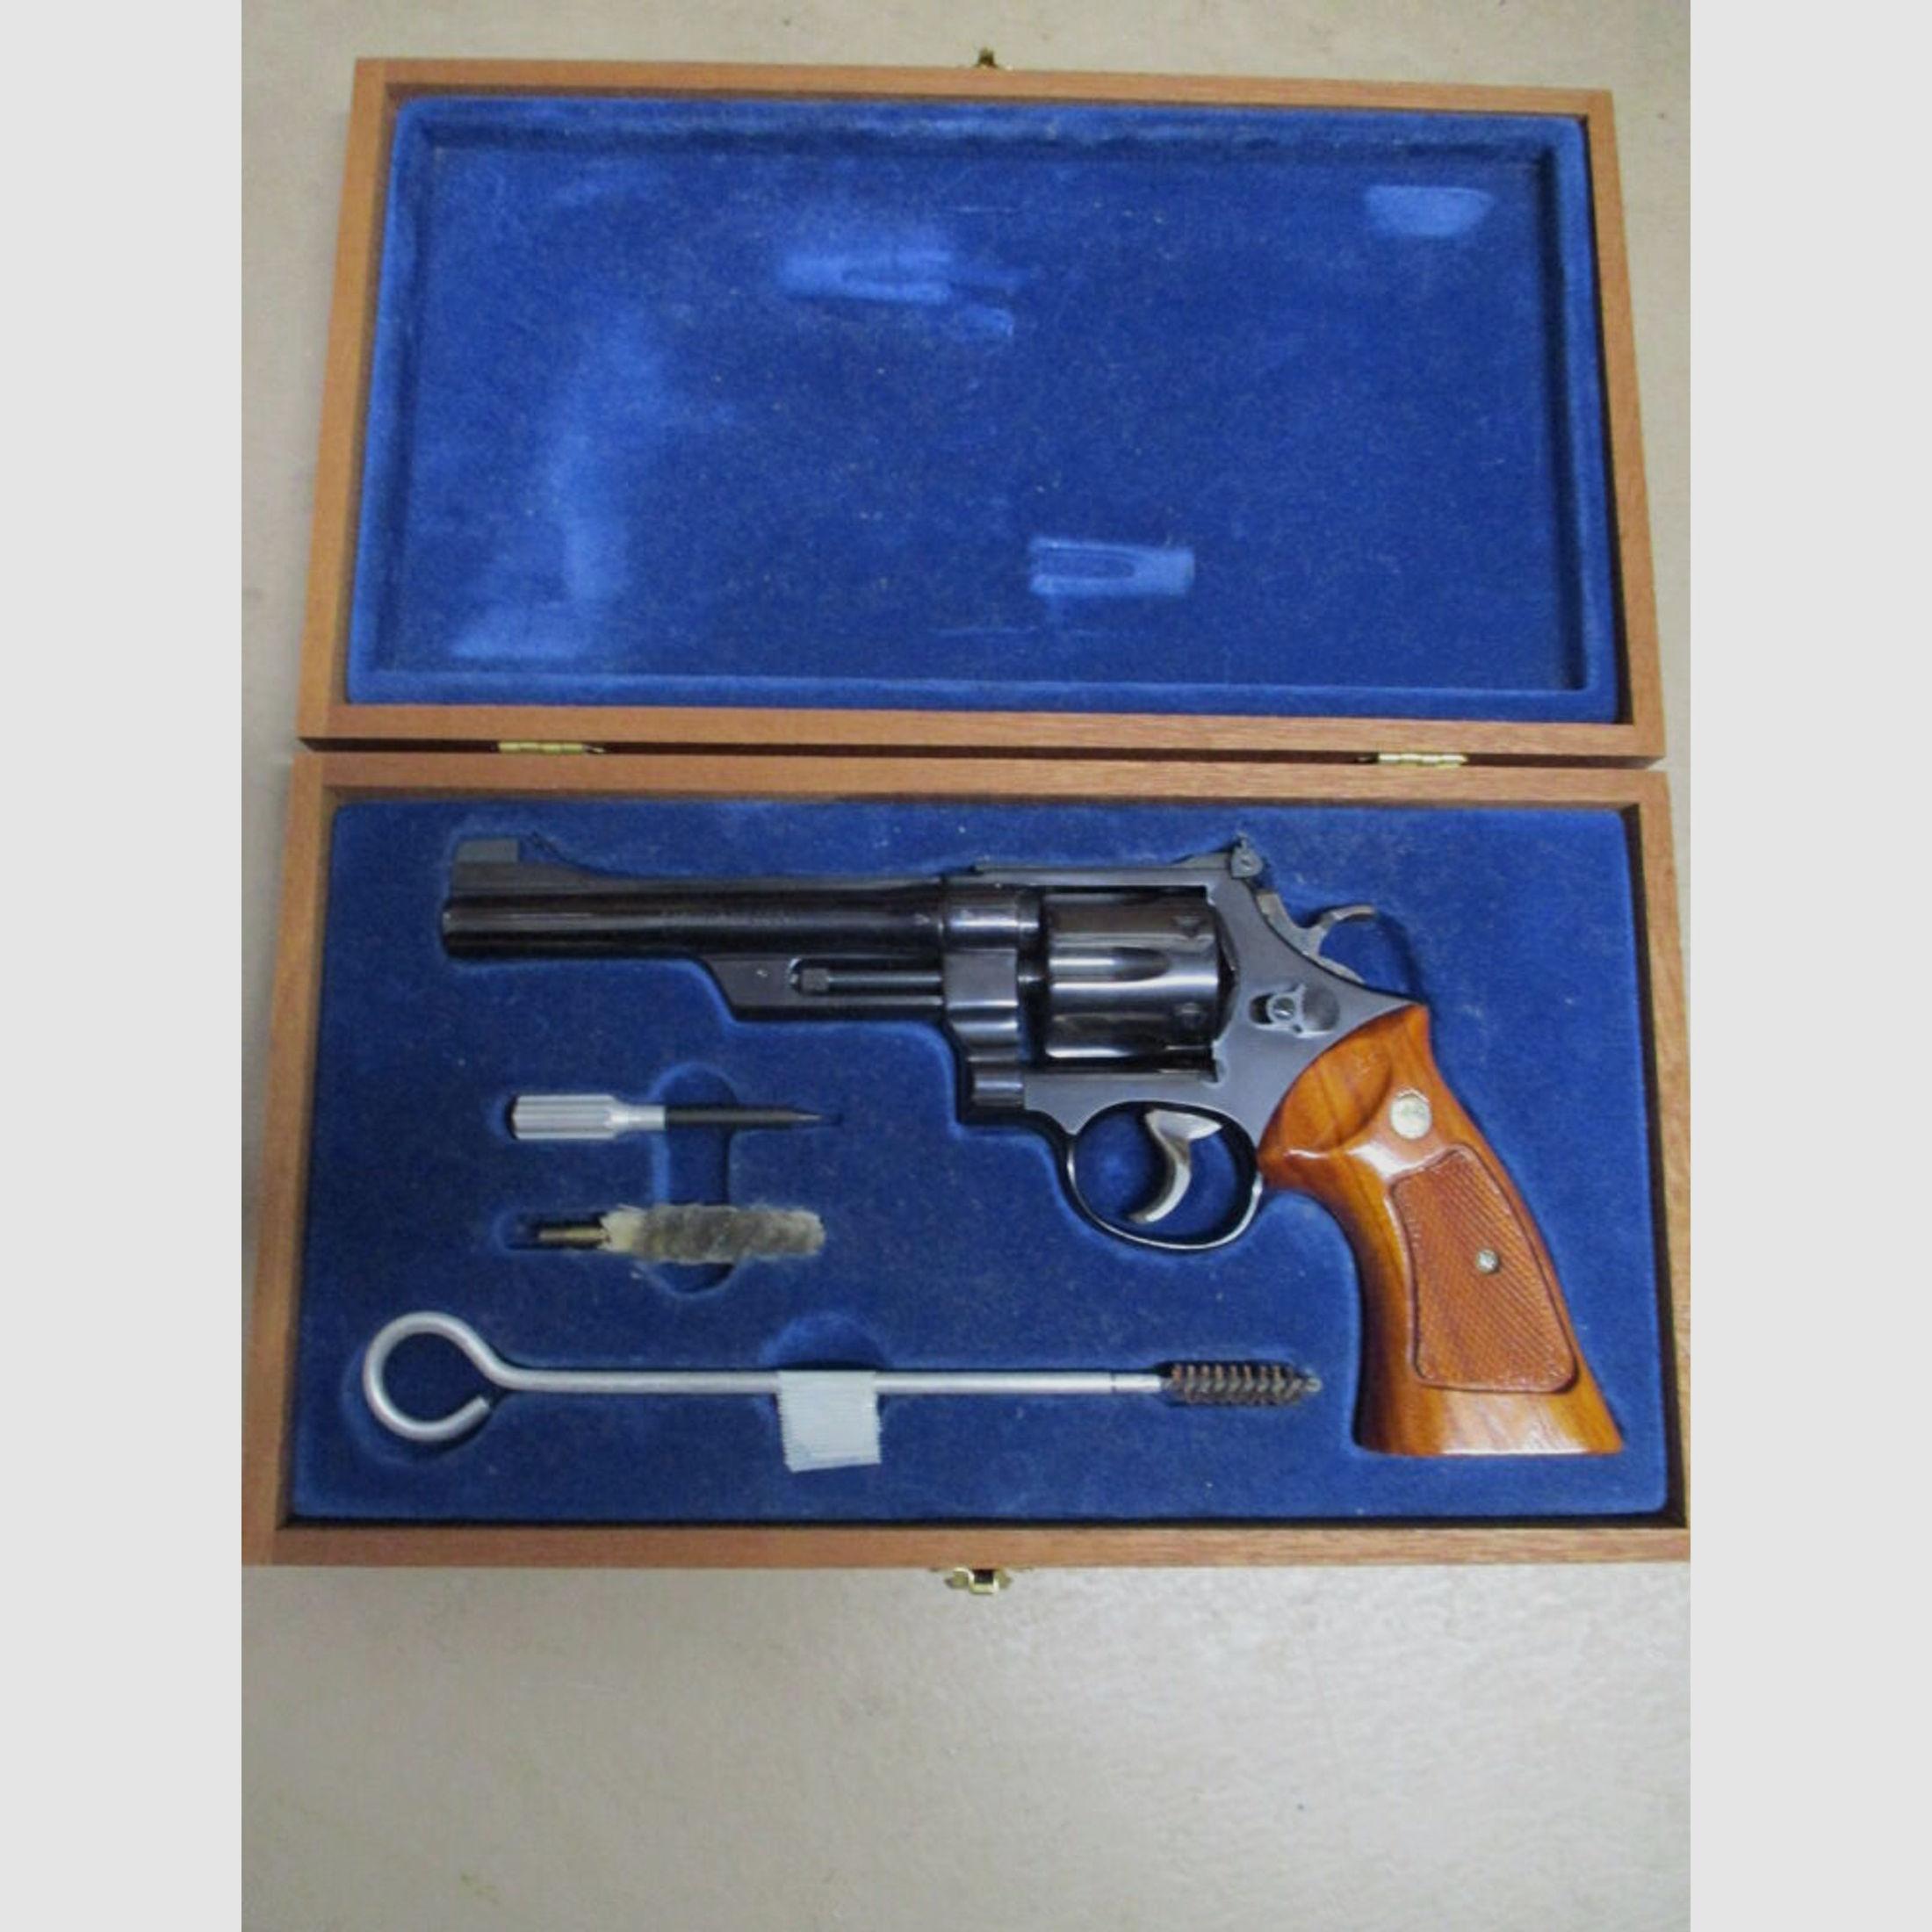 Revolver Smith & Wesson Modell 27 in Presentation Case -wie neu-	 27